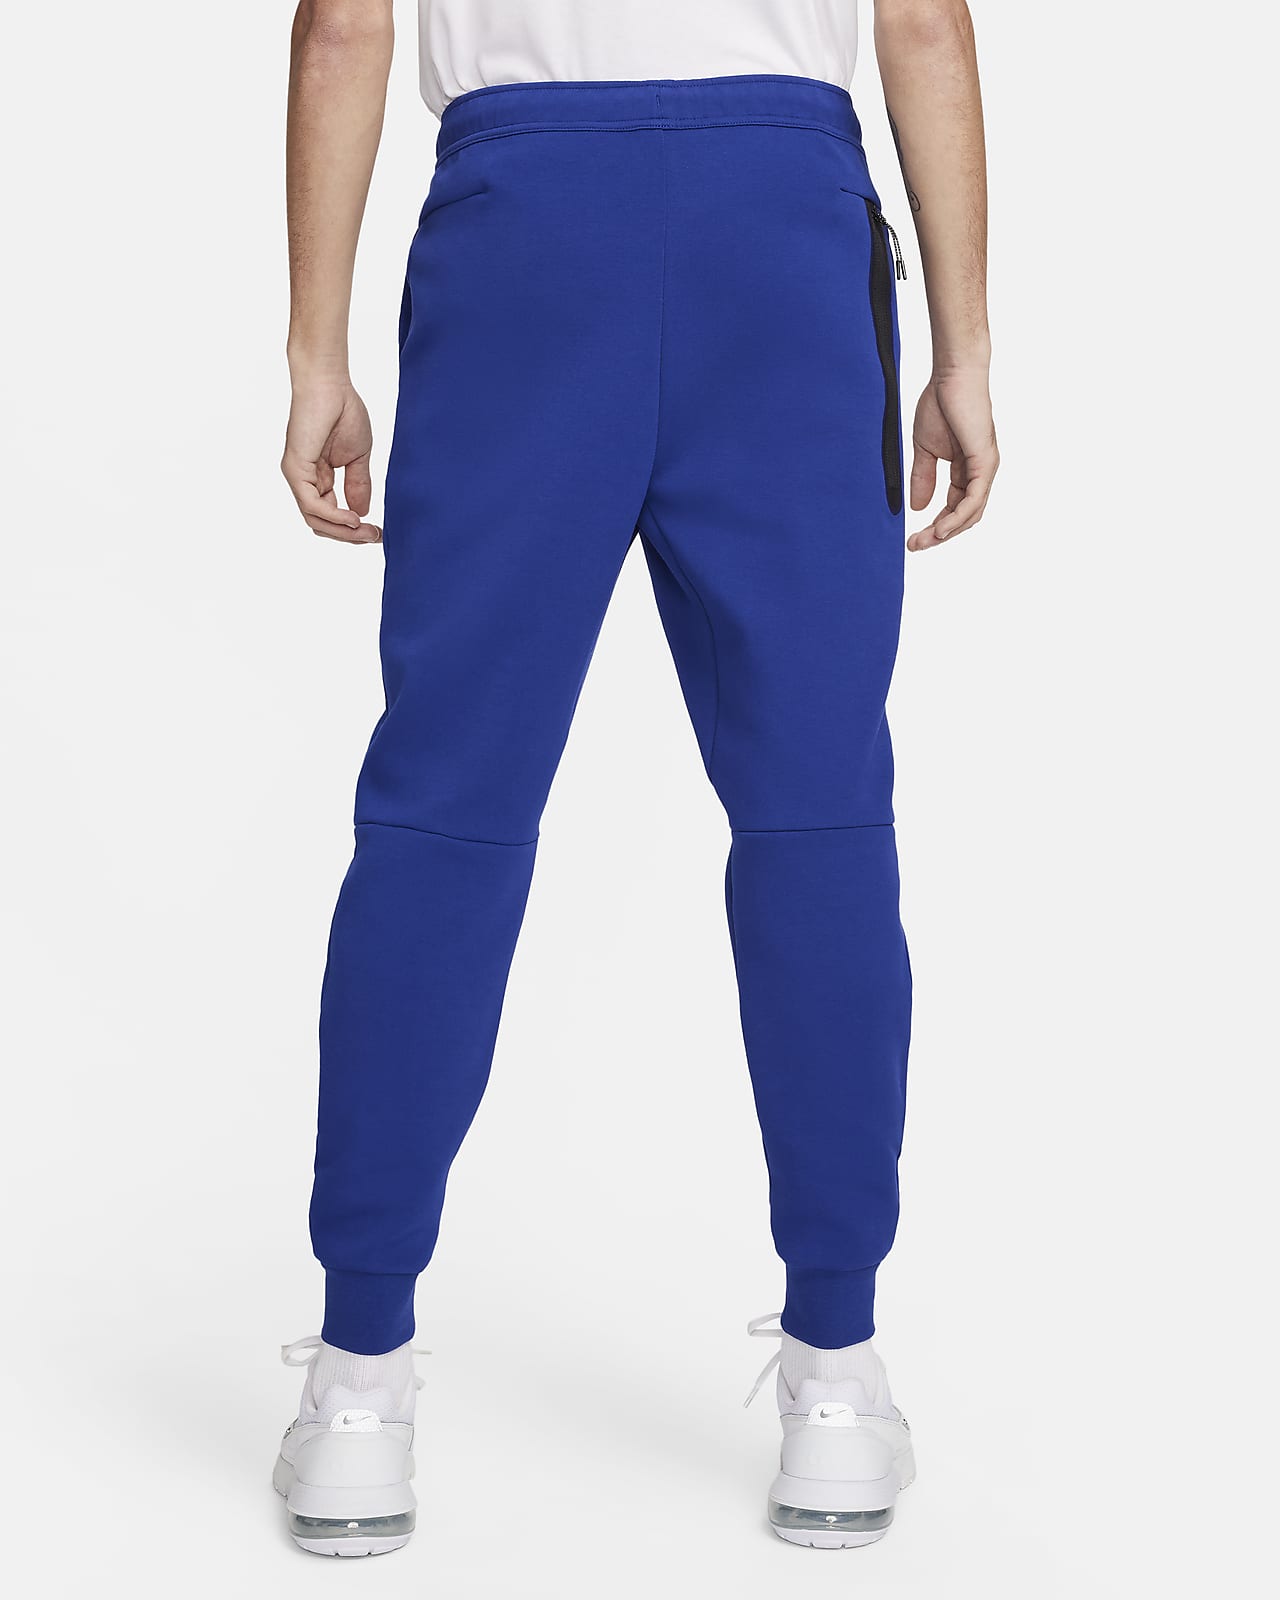 Nike Men's Basic Tech Fleece Pants - Running Warehouse Europe